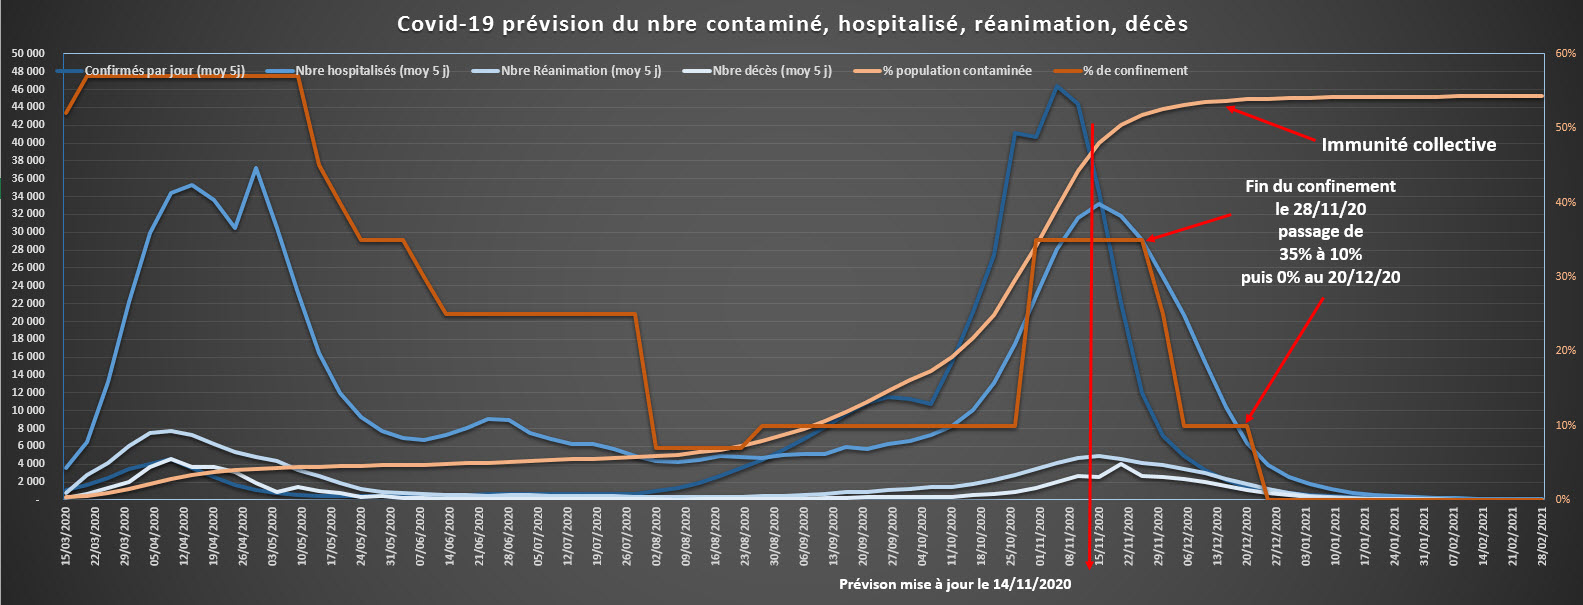 Covid 19 prevision 2020 11 14 contamination hospitalisation reanimation deces confinement